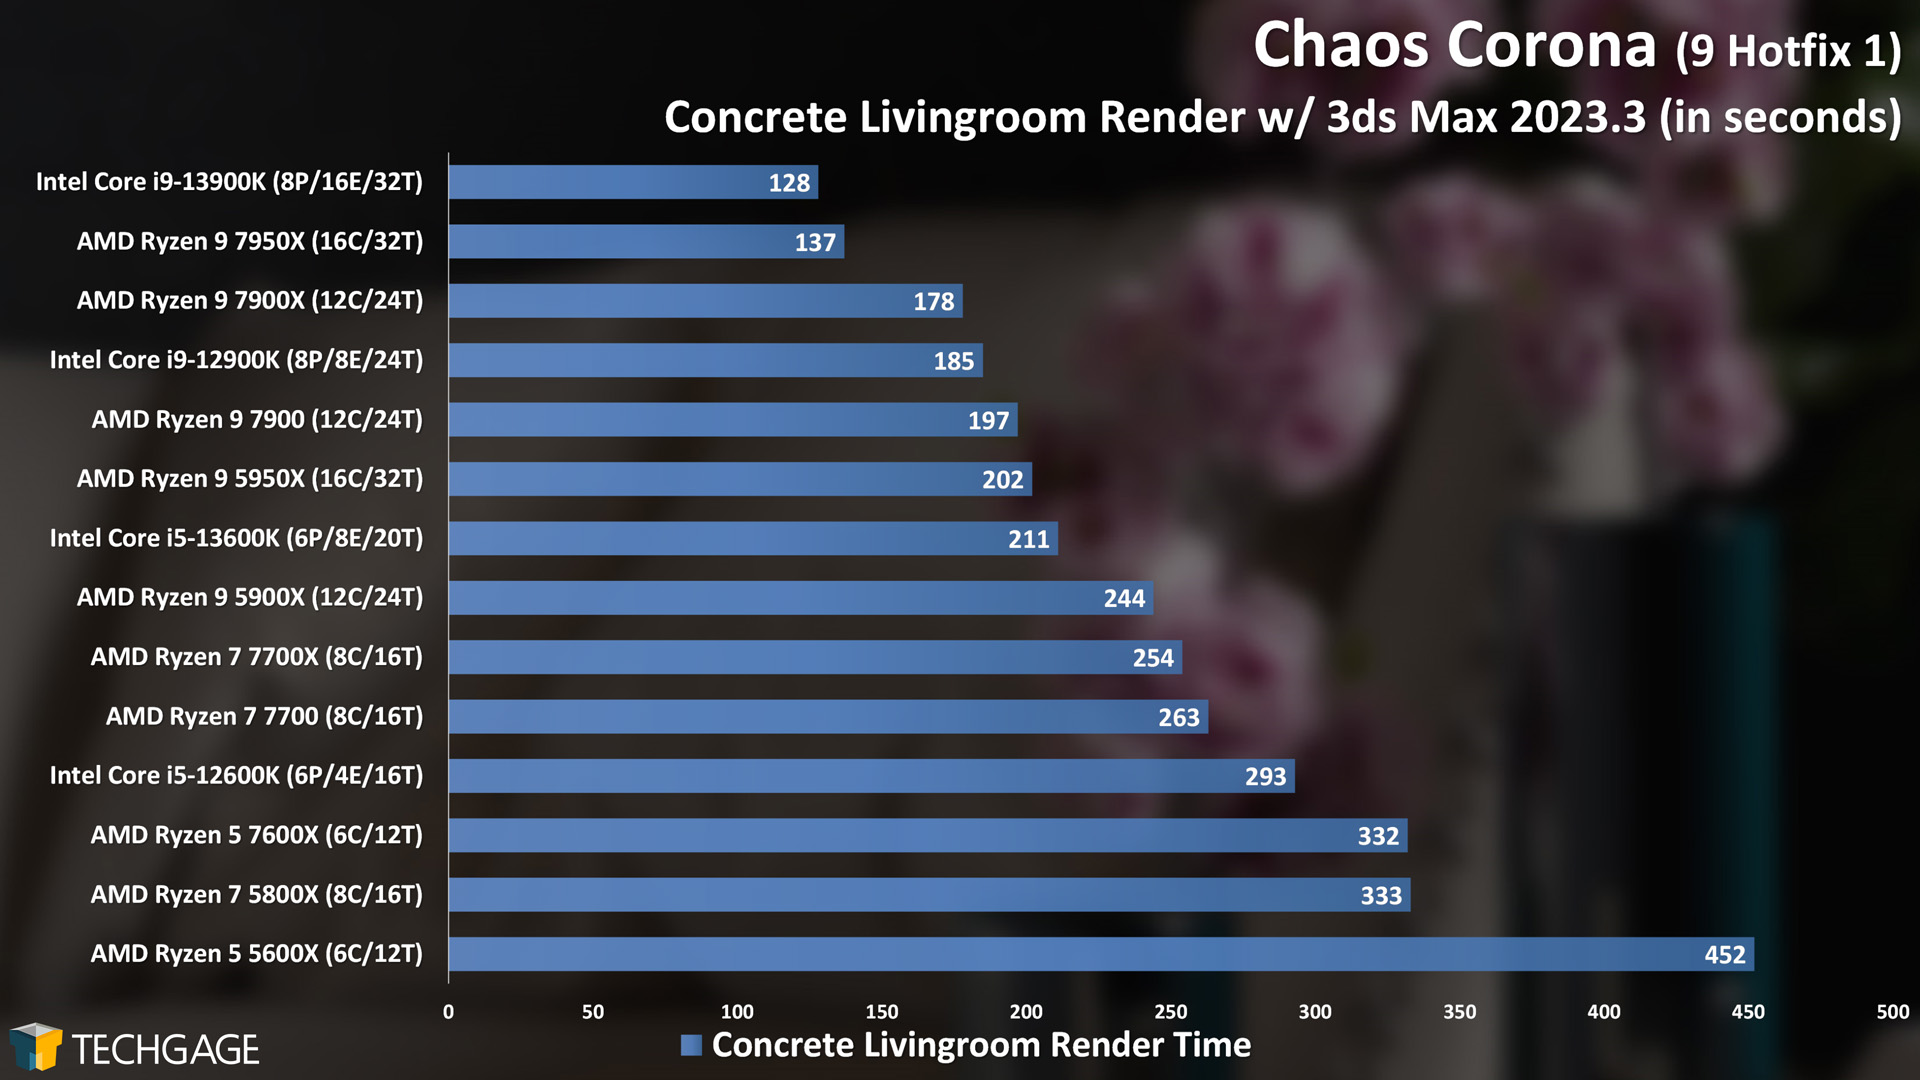 Chaos Corona - CPU Rendering Performance (Concrete Livingroom)